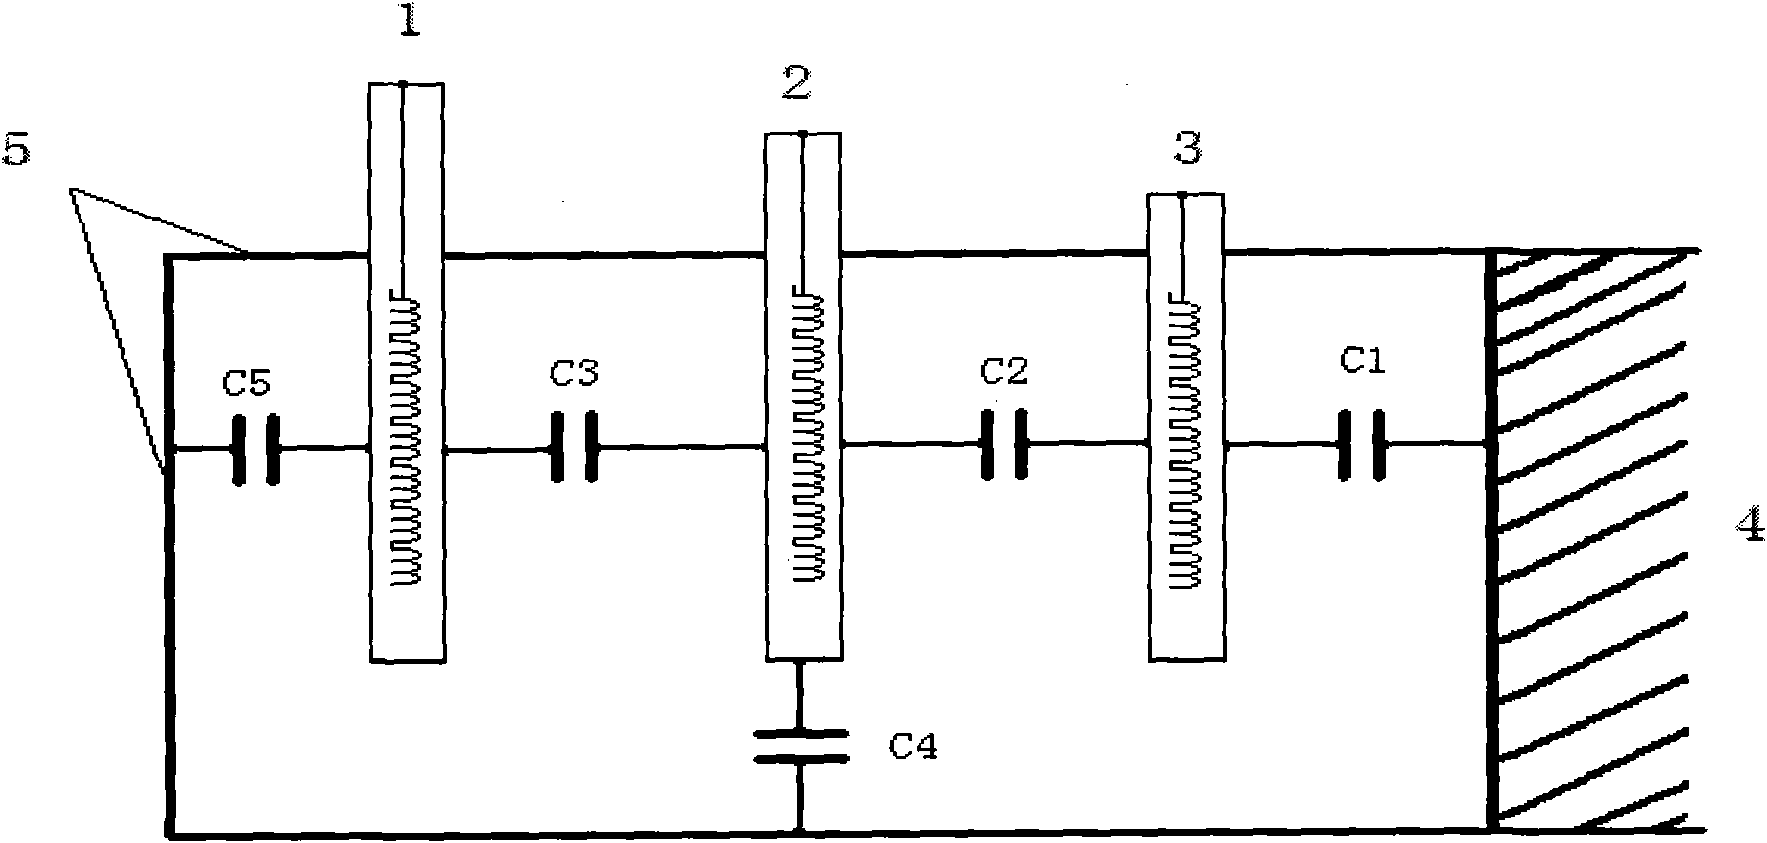 Dielectric-capacitance testing method of deformation degree of transformer winding